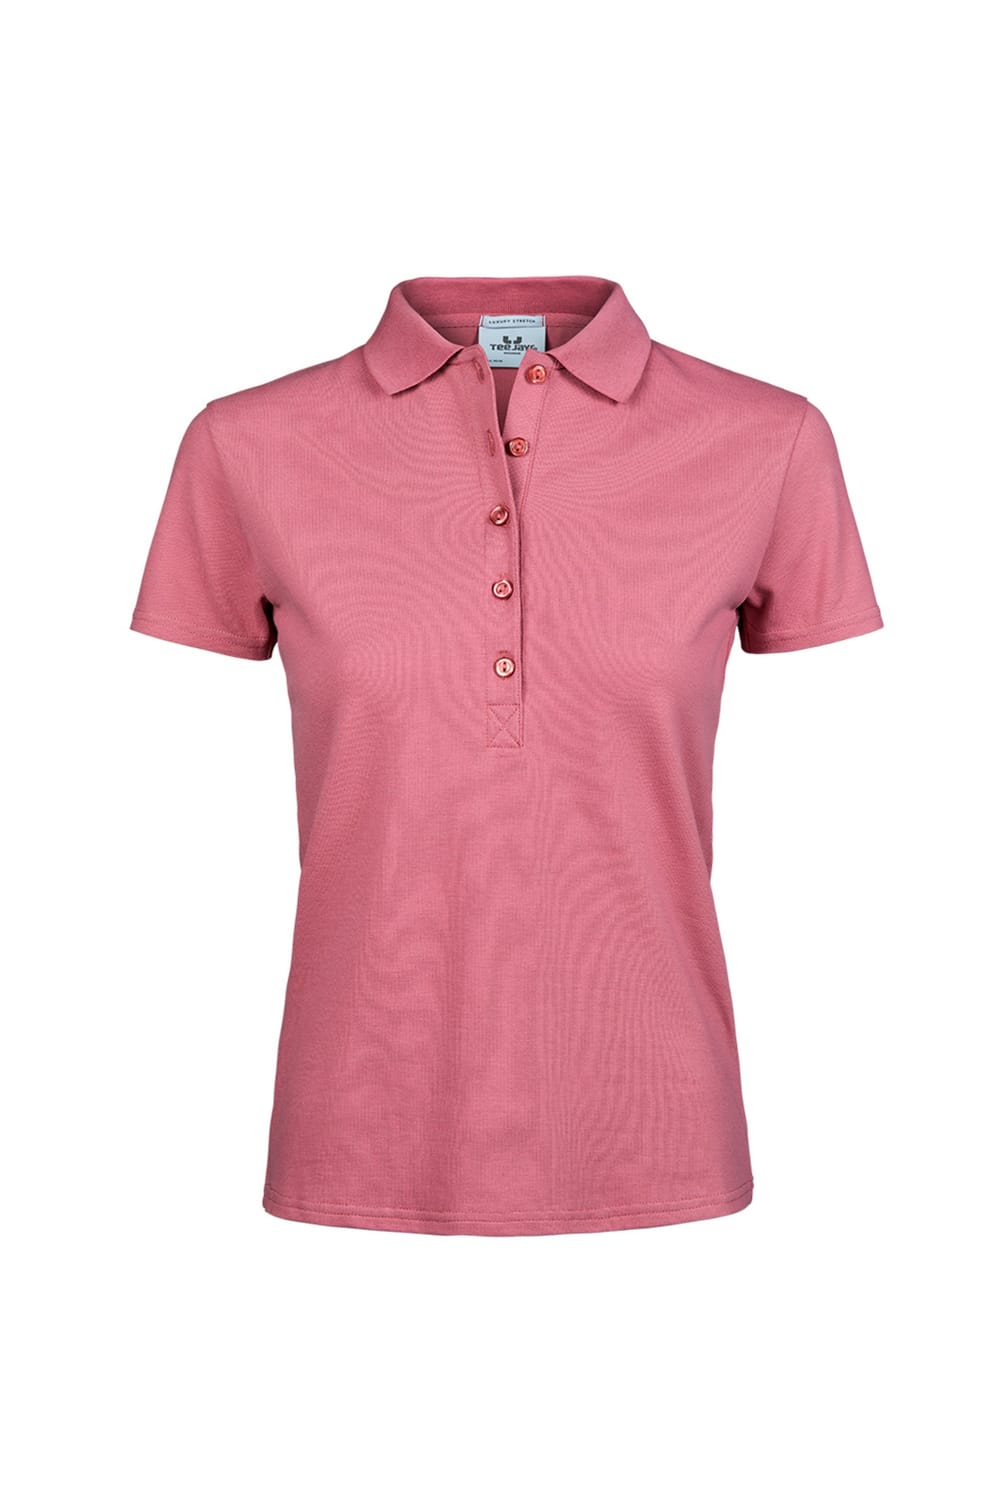 Tee Jays Womens/Ladies Luxury Stretch Polo Shirt (Rose)